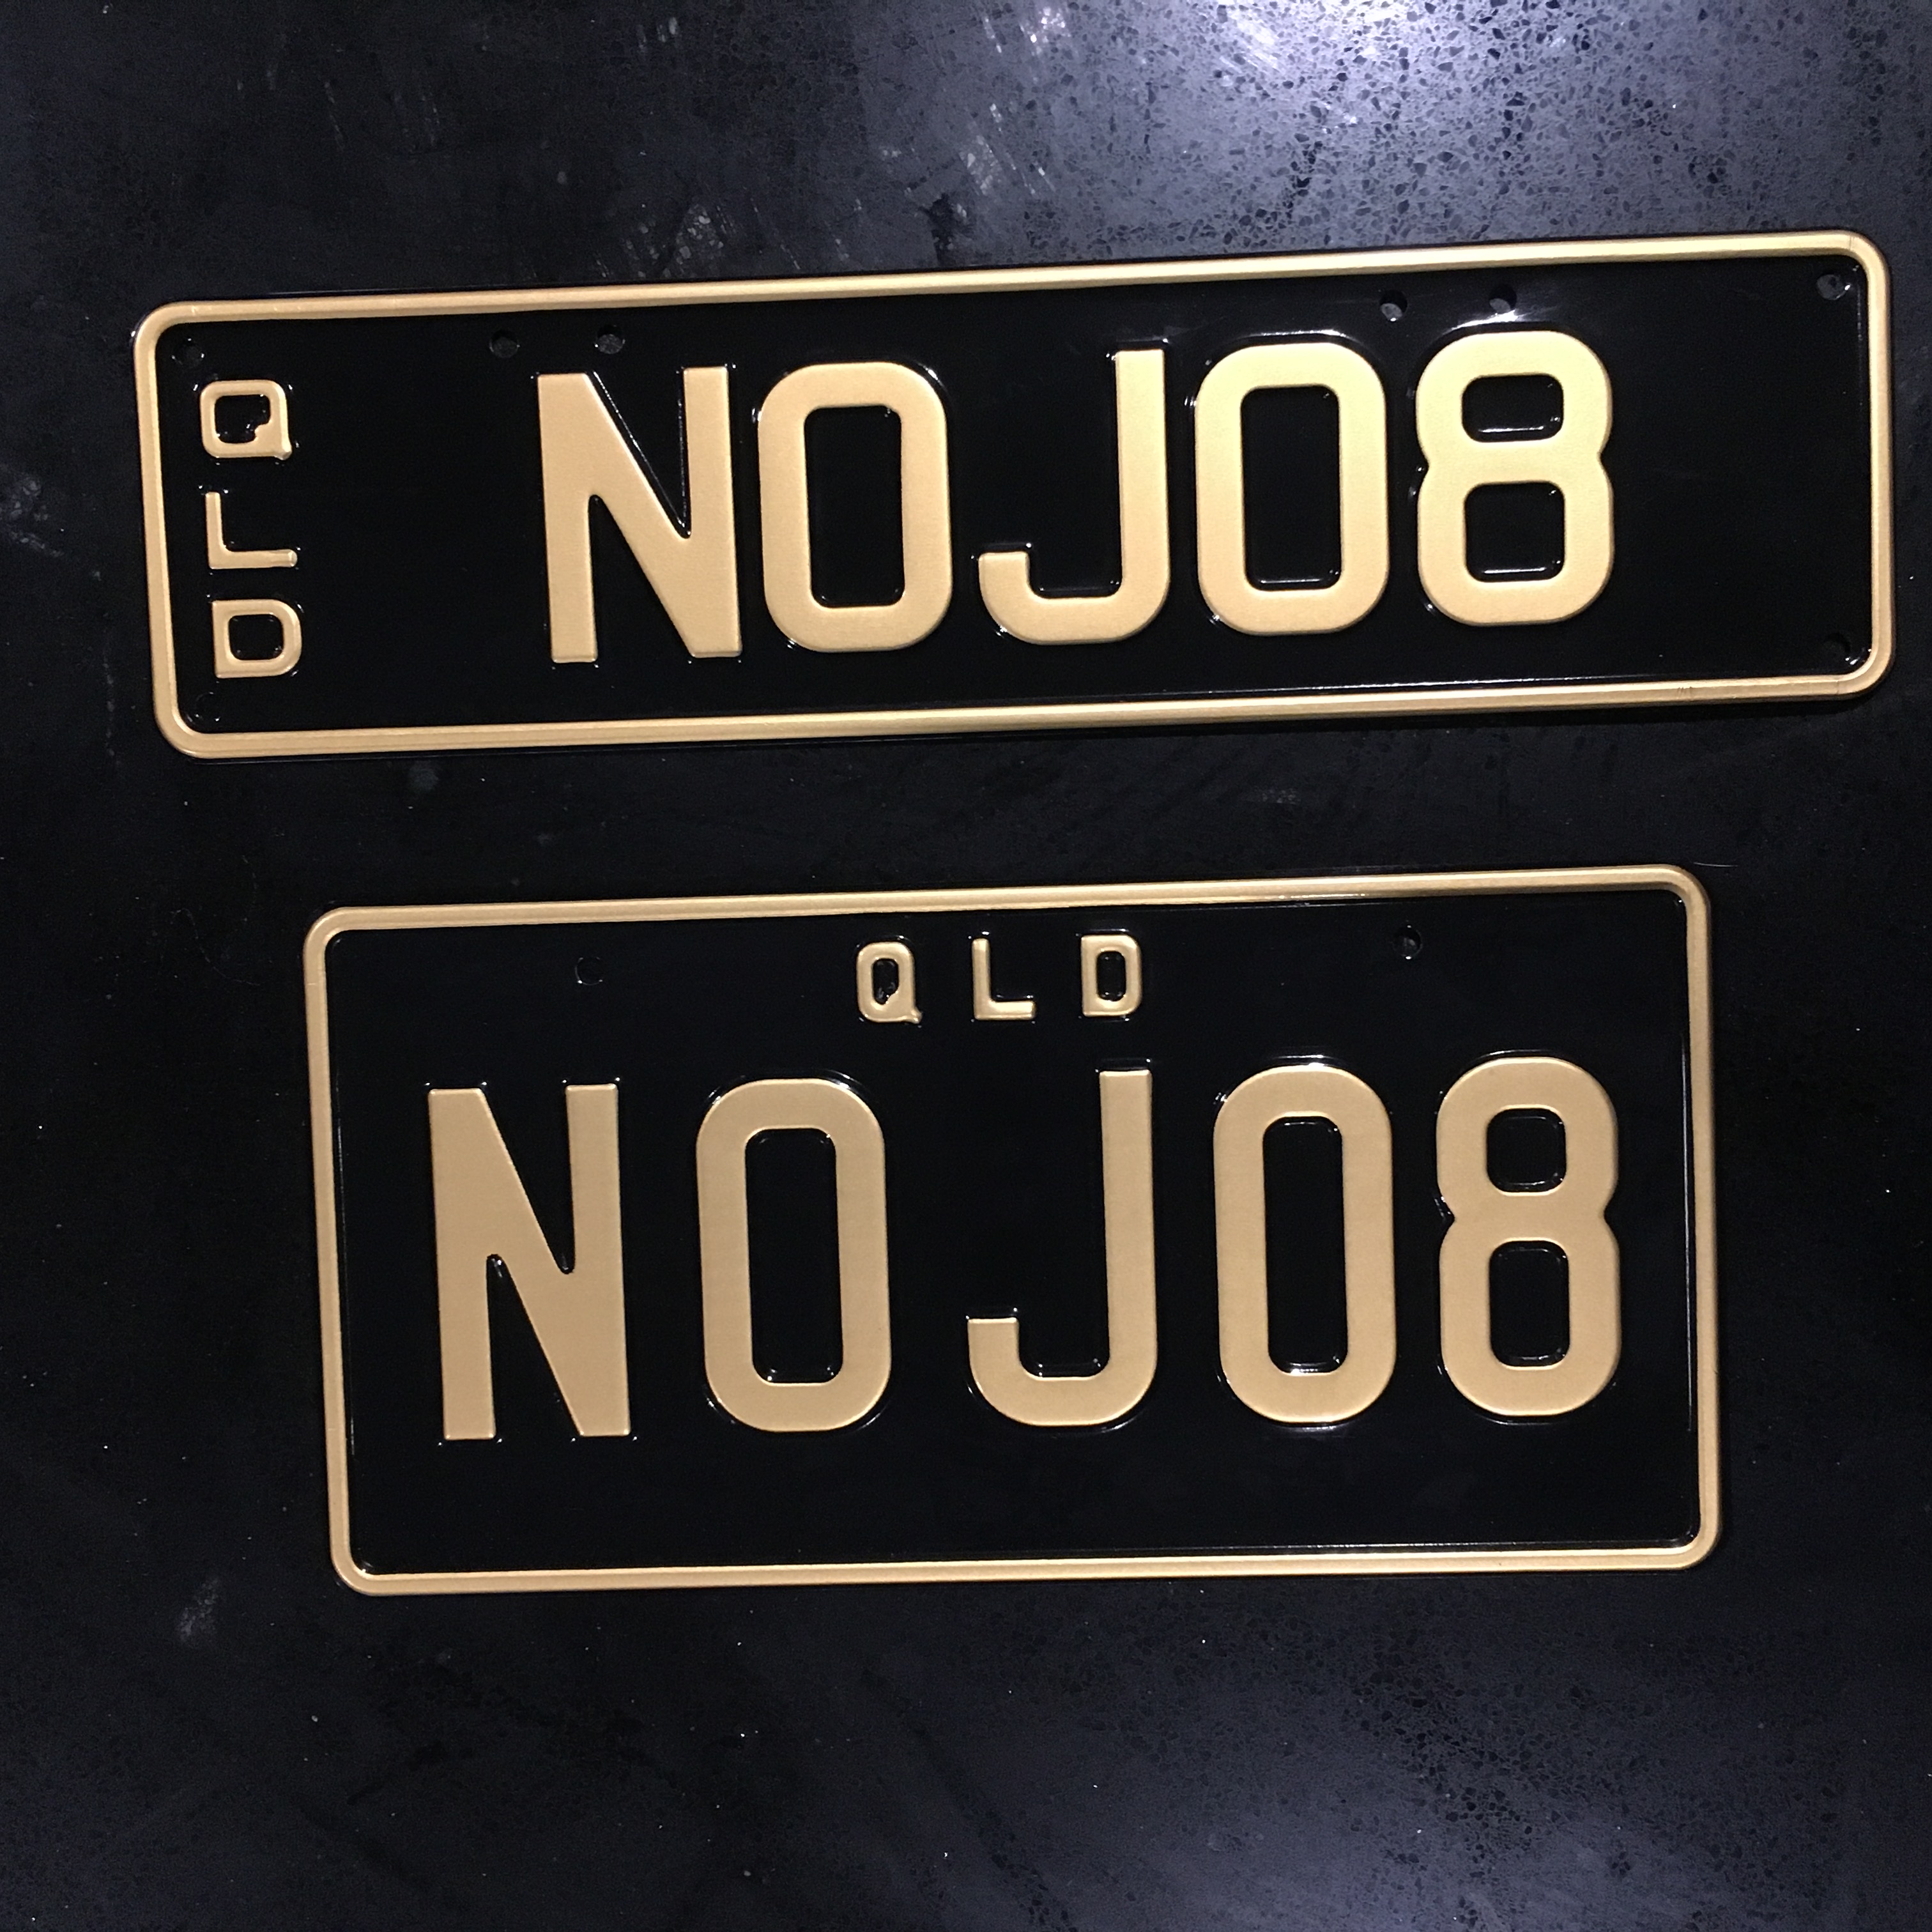 NOJ08 Plates